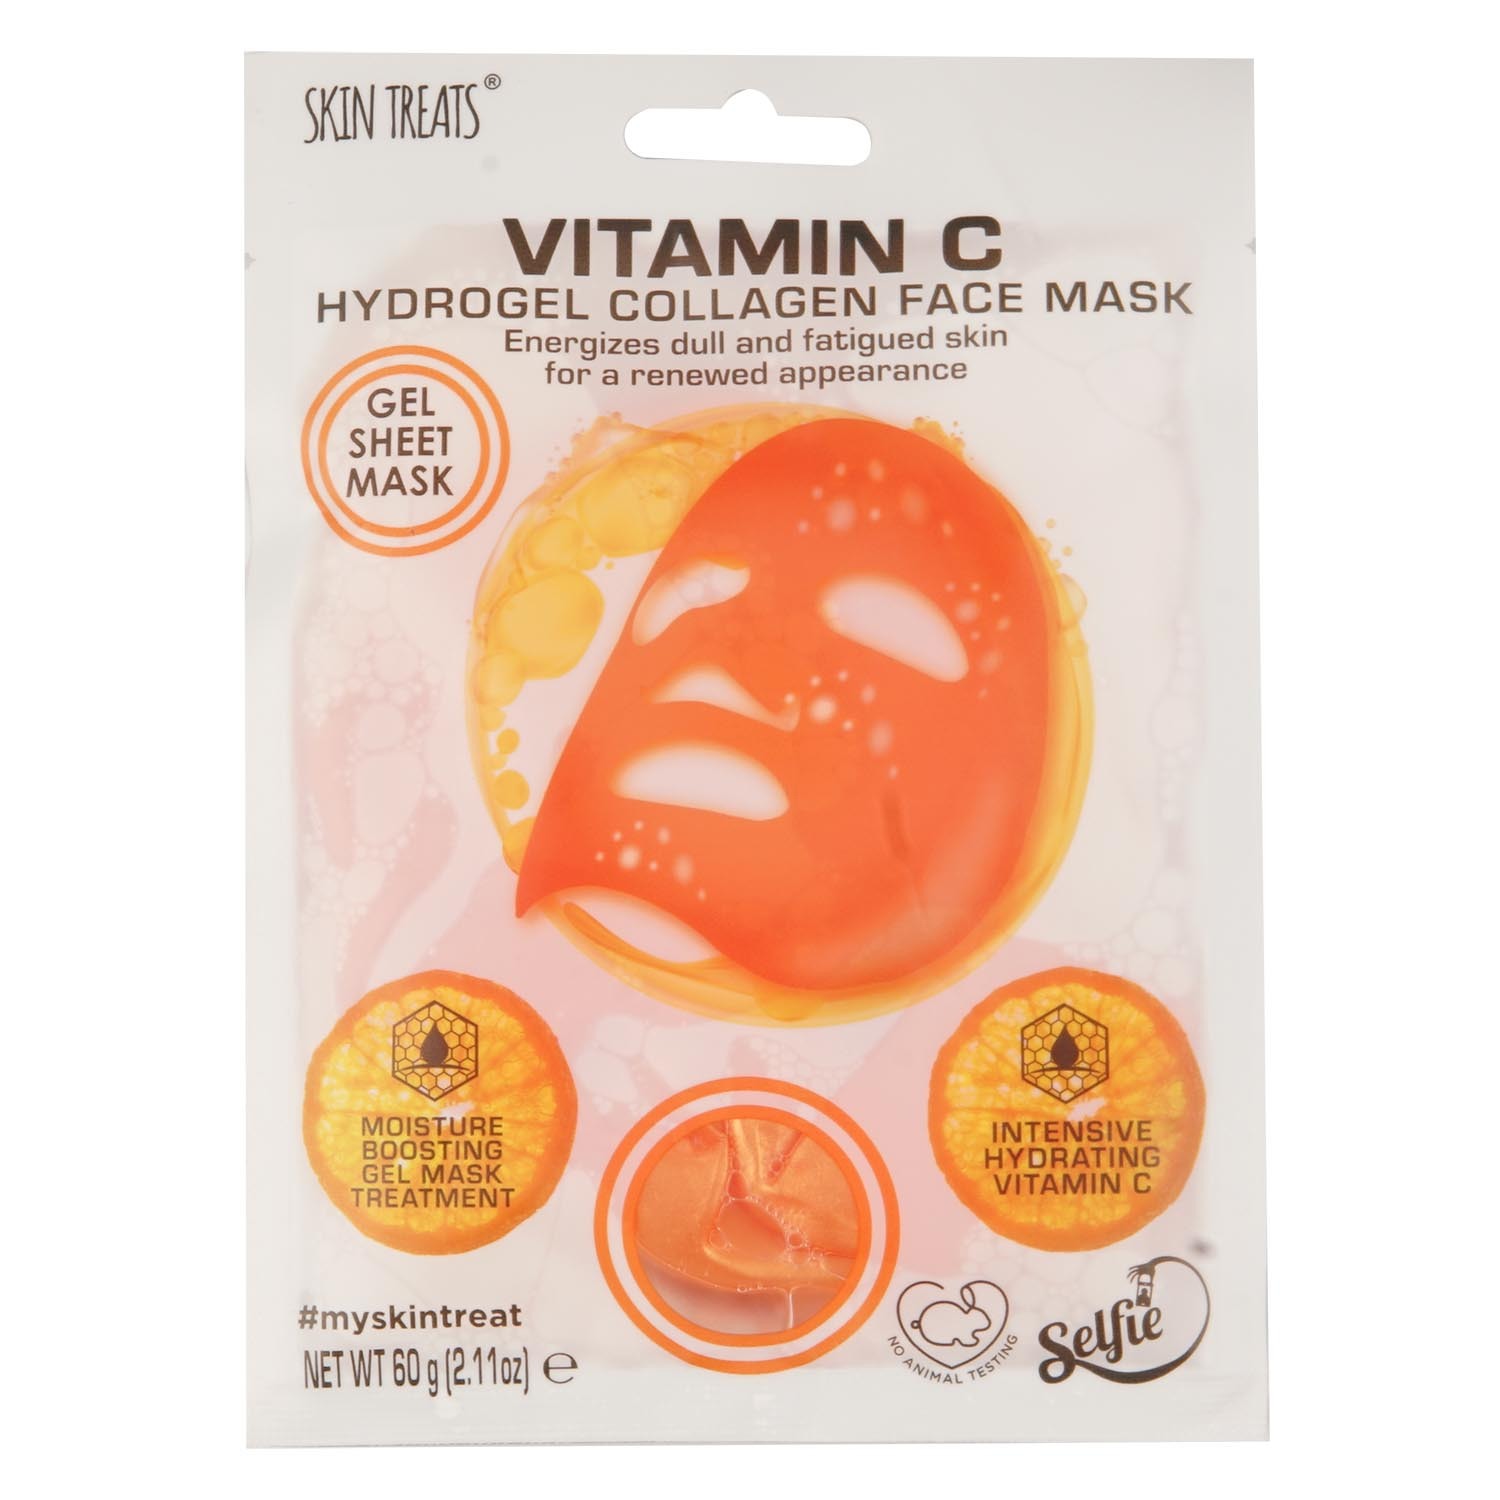 Skin Treats Vitamin C Hydrogel Face Mask Image